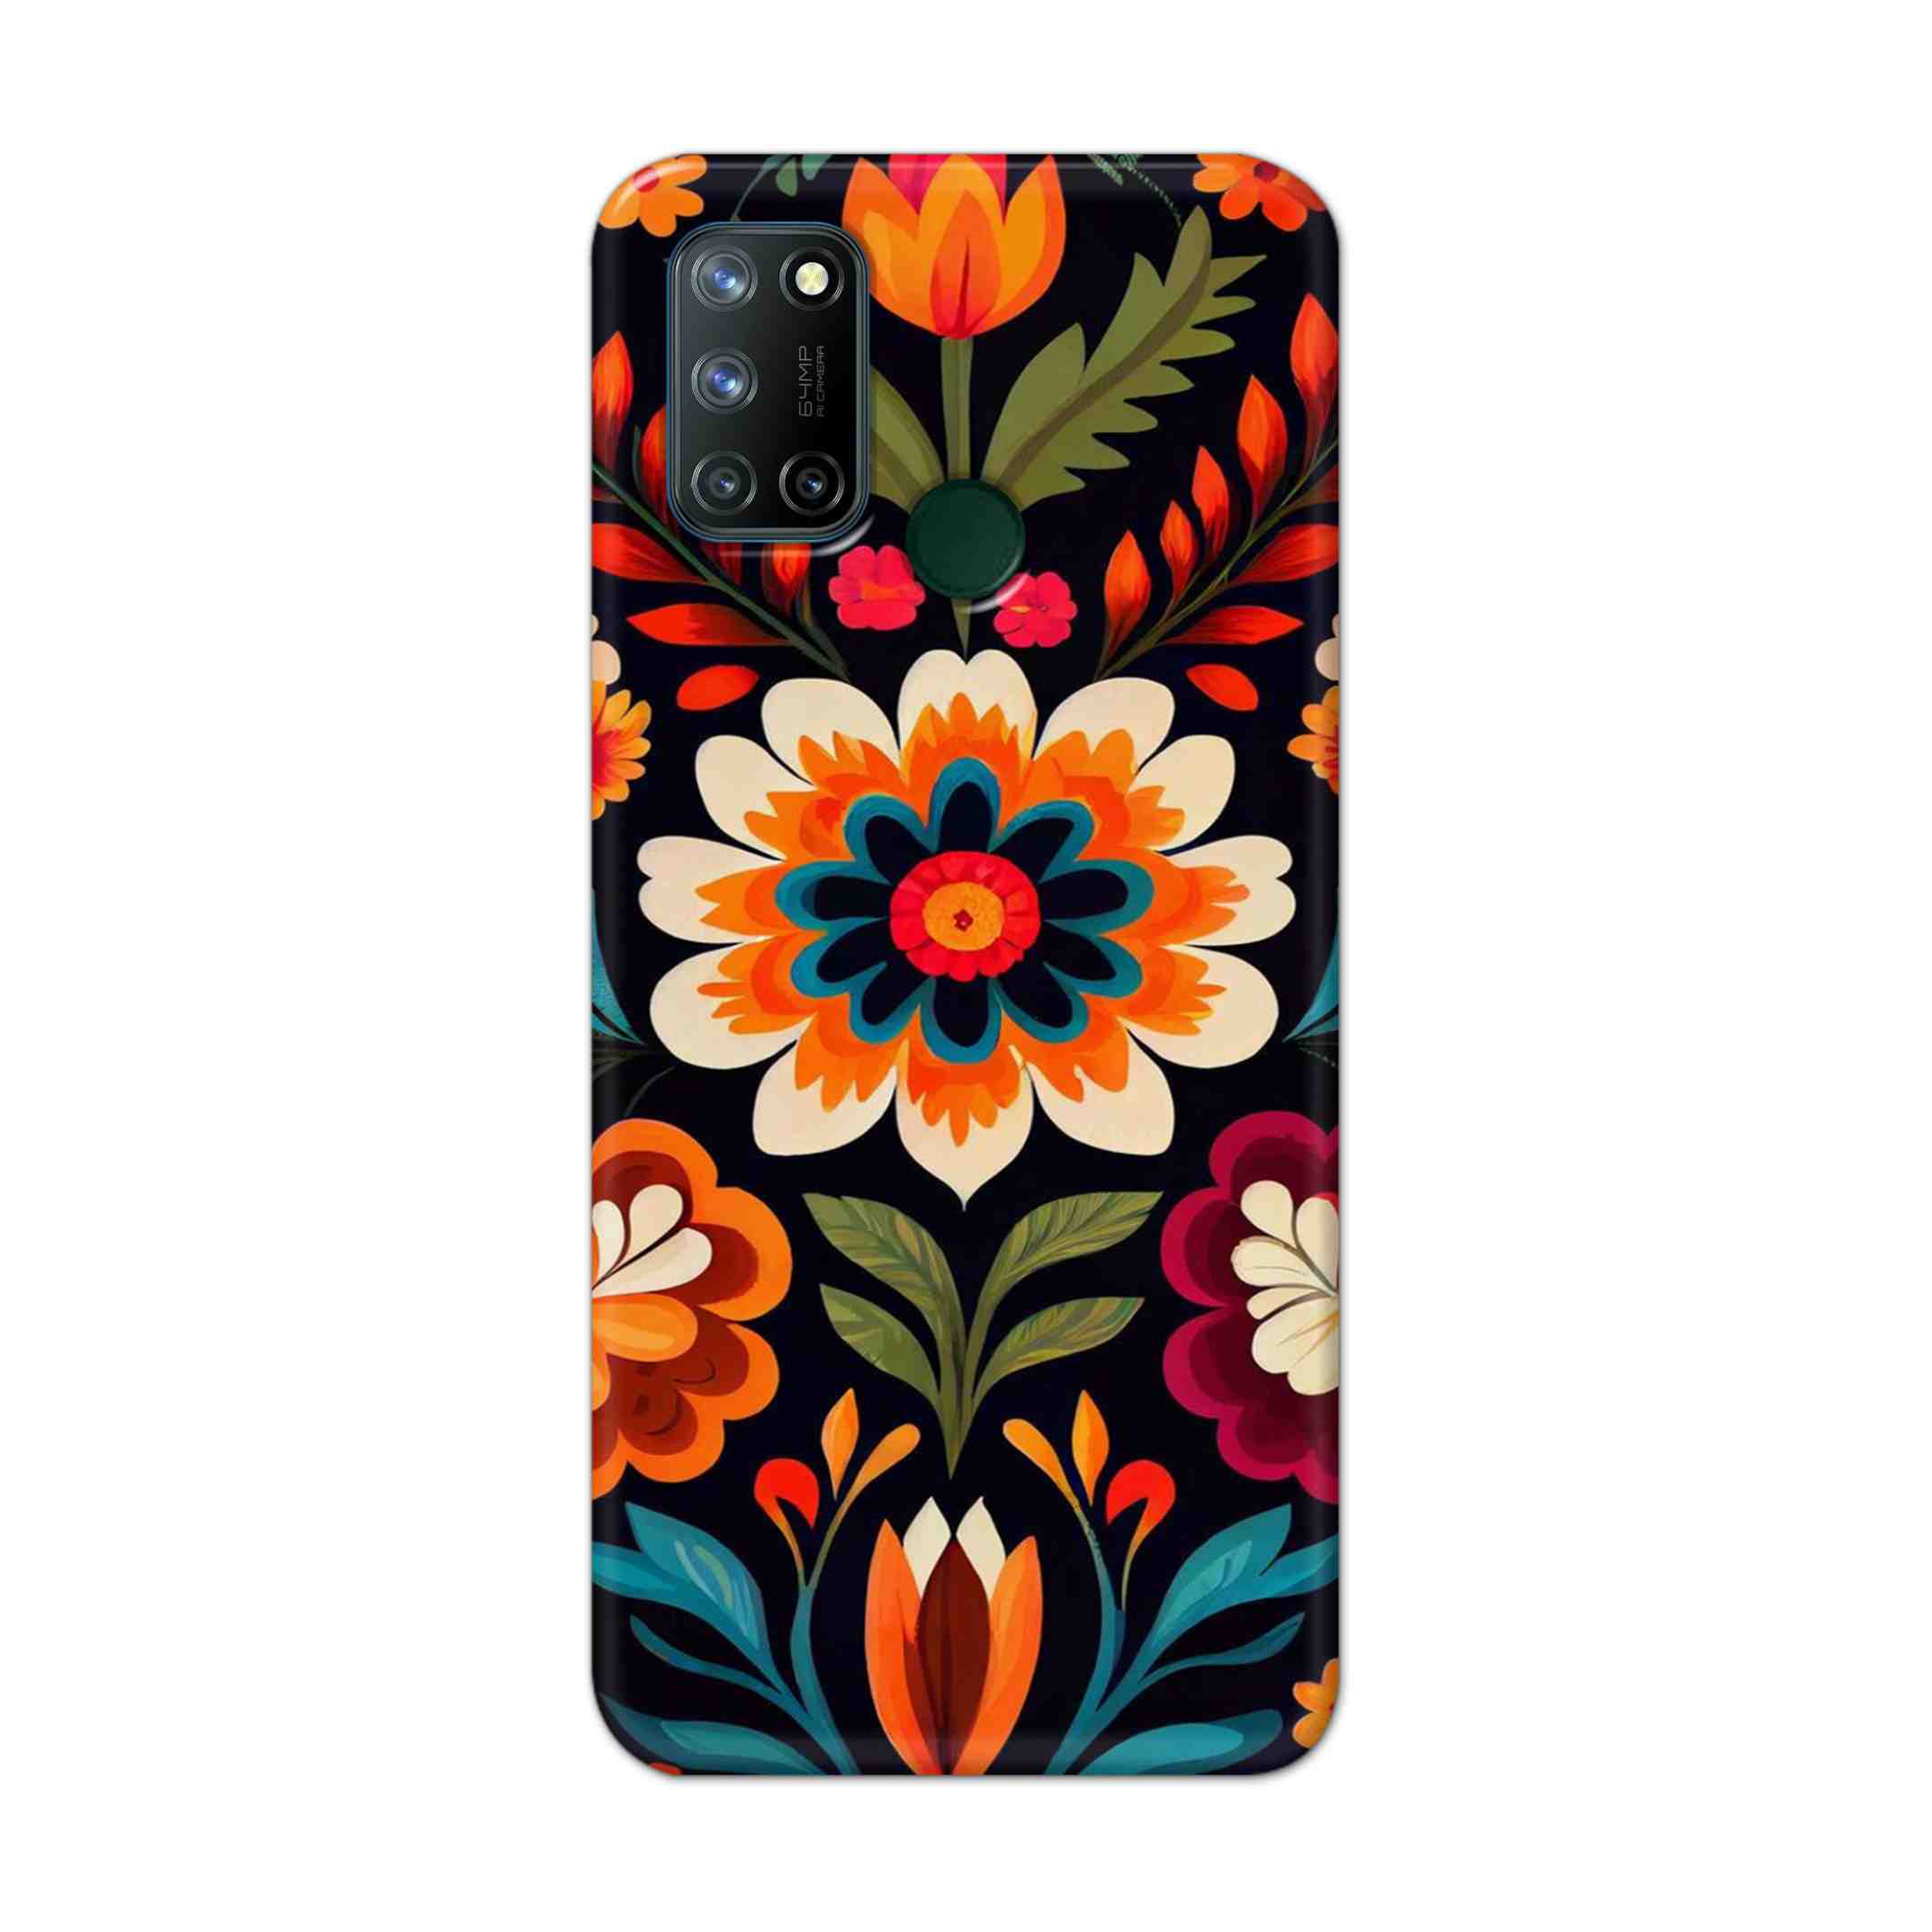 Buy Flower Hard Back Mobile Phone Case Cover For Realme 7i Online